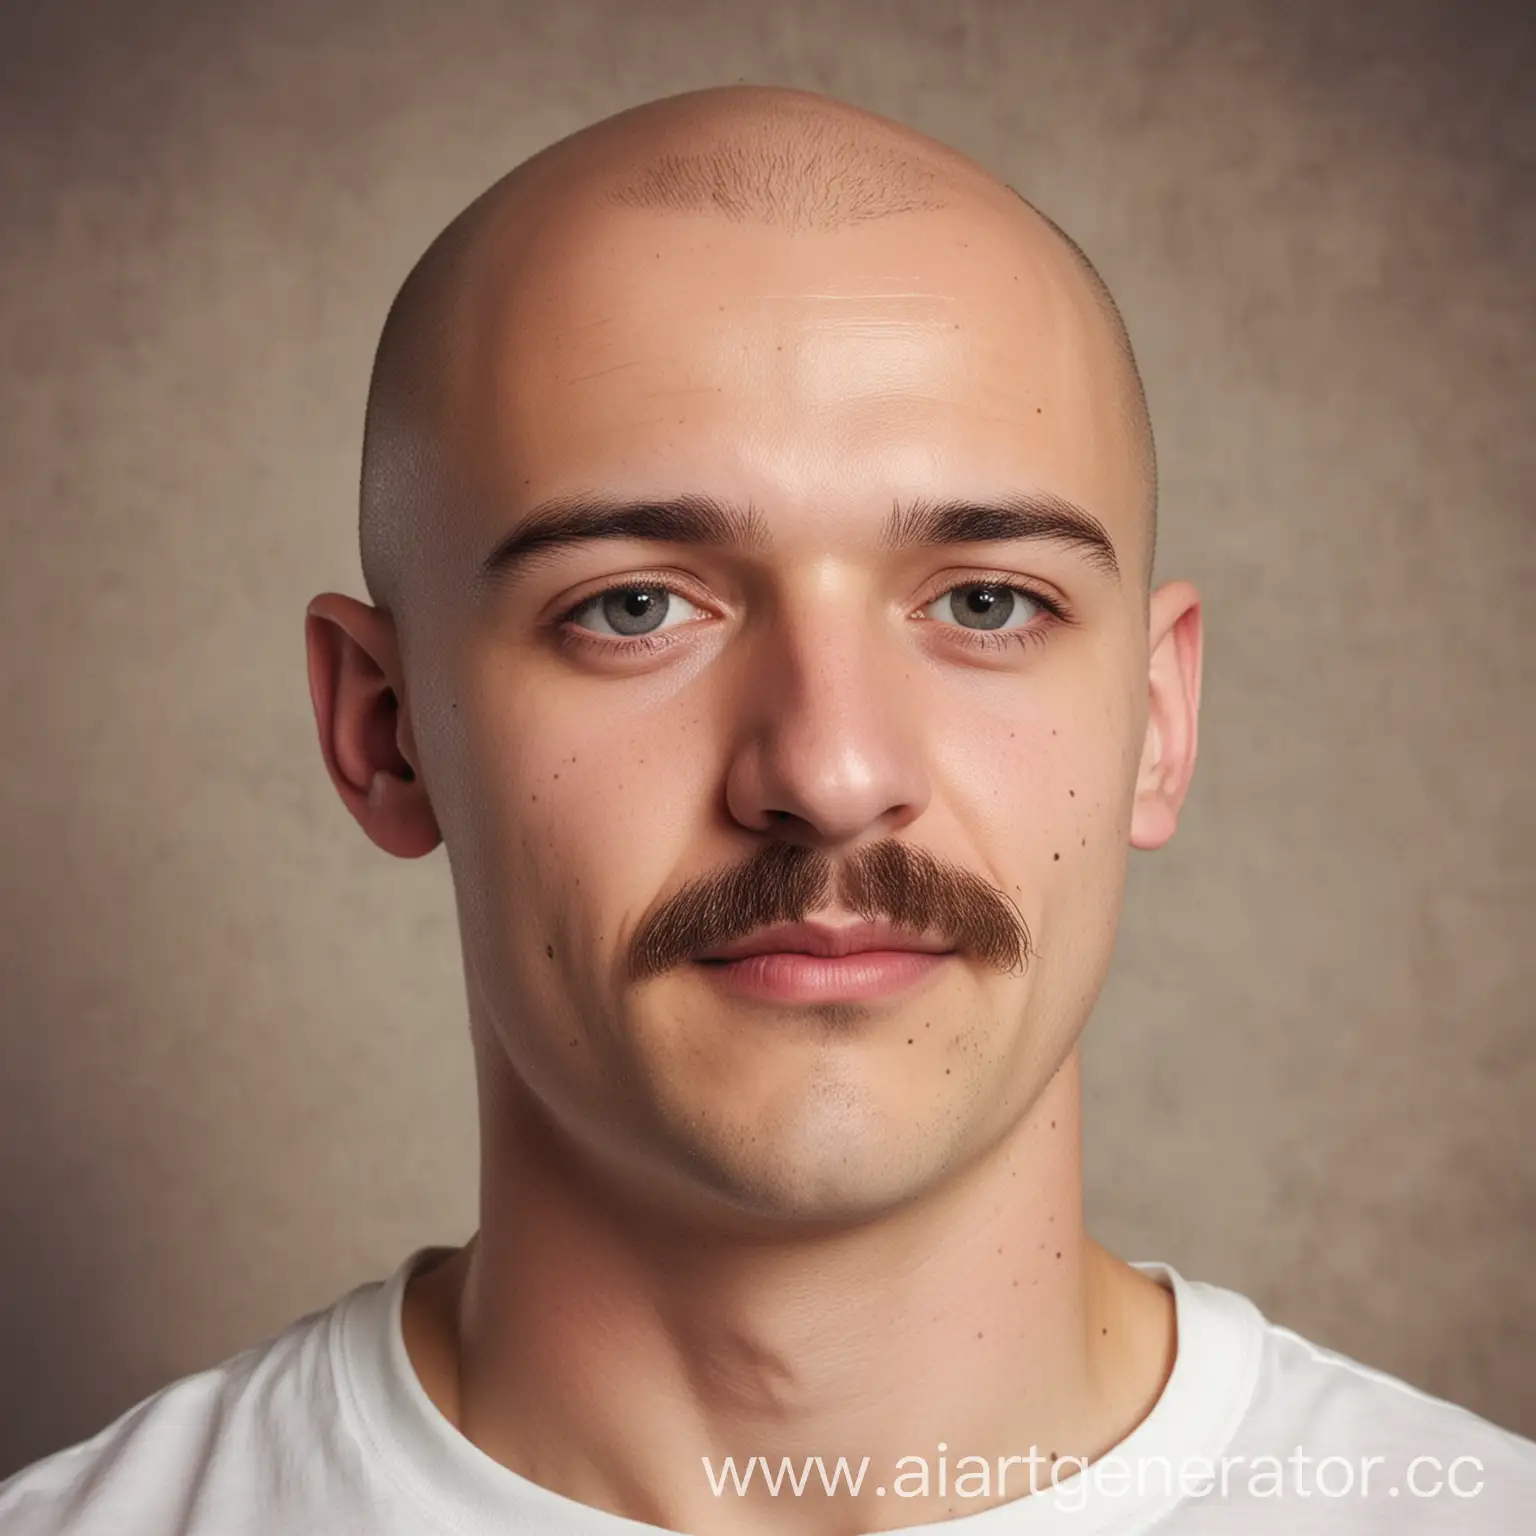 European-Bald-Young-Man-with-a-Distinct-Mustache-Portrait